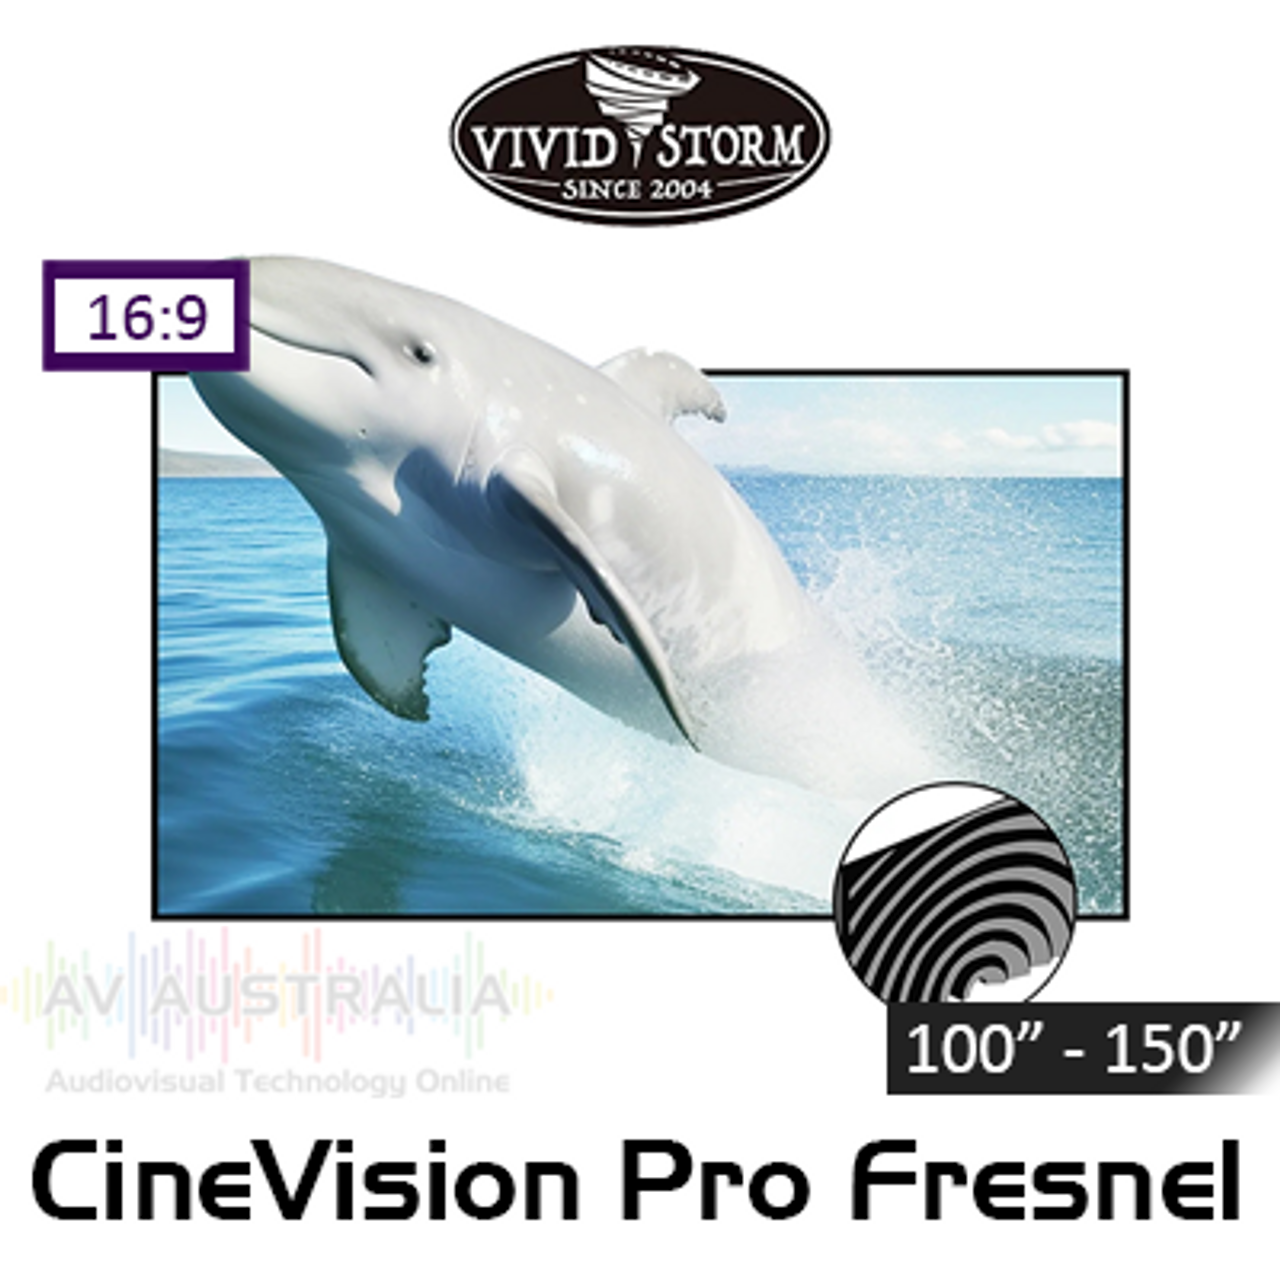 Vividstorm CineVision Pro UST ALR Fixed Frame Fresnel Projection Screens (100" - 150")